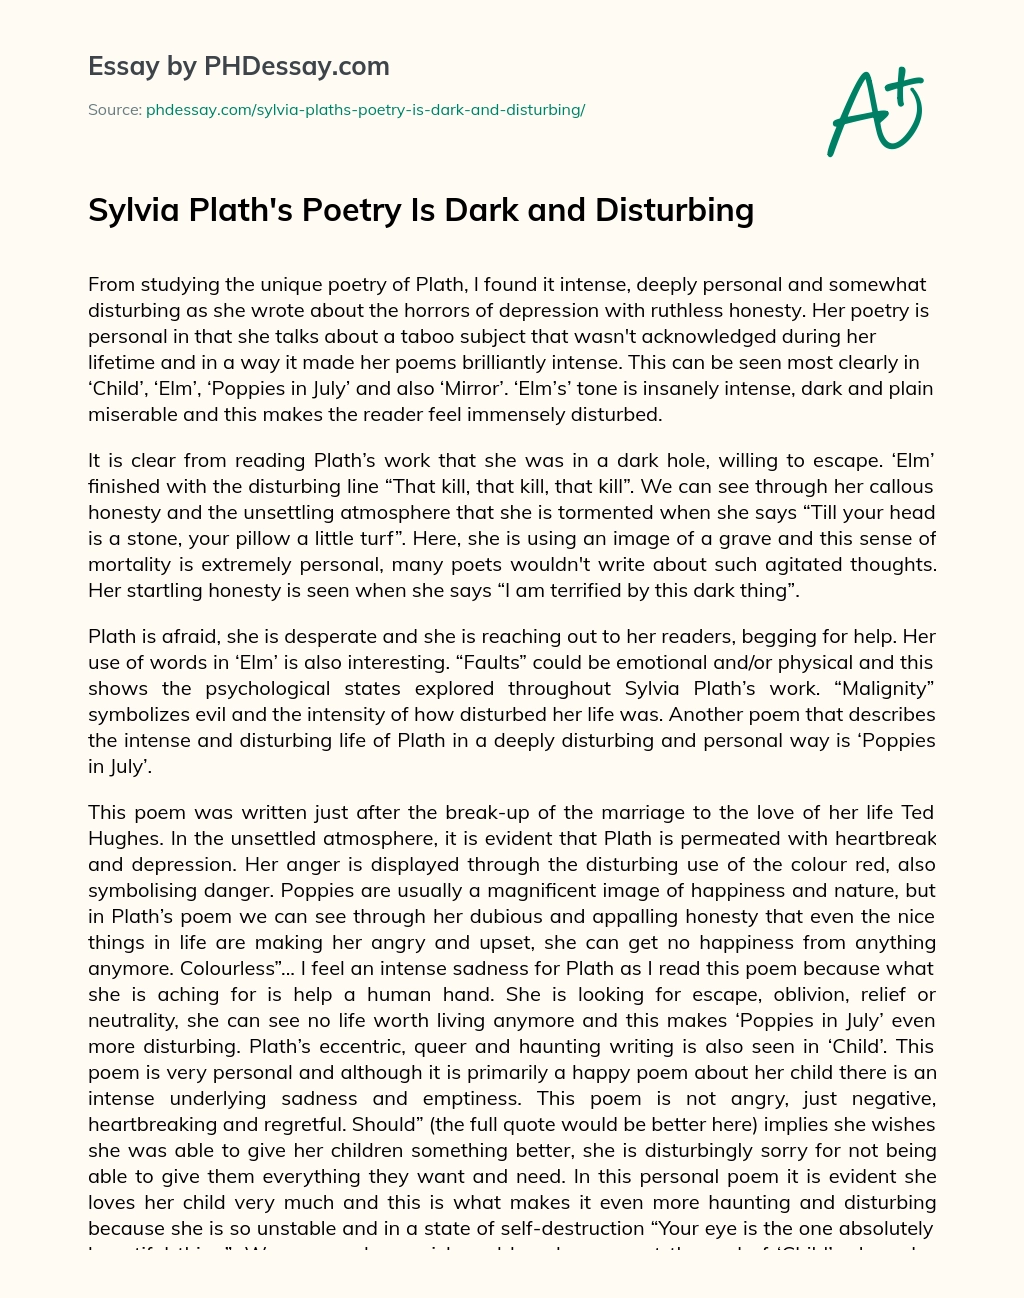 Sylvia Plath’s Poetry Is Dark and Disturbing essay